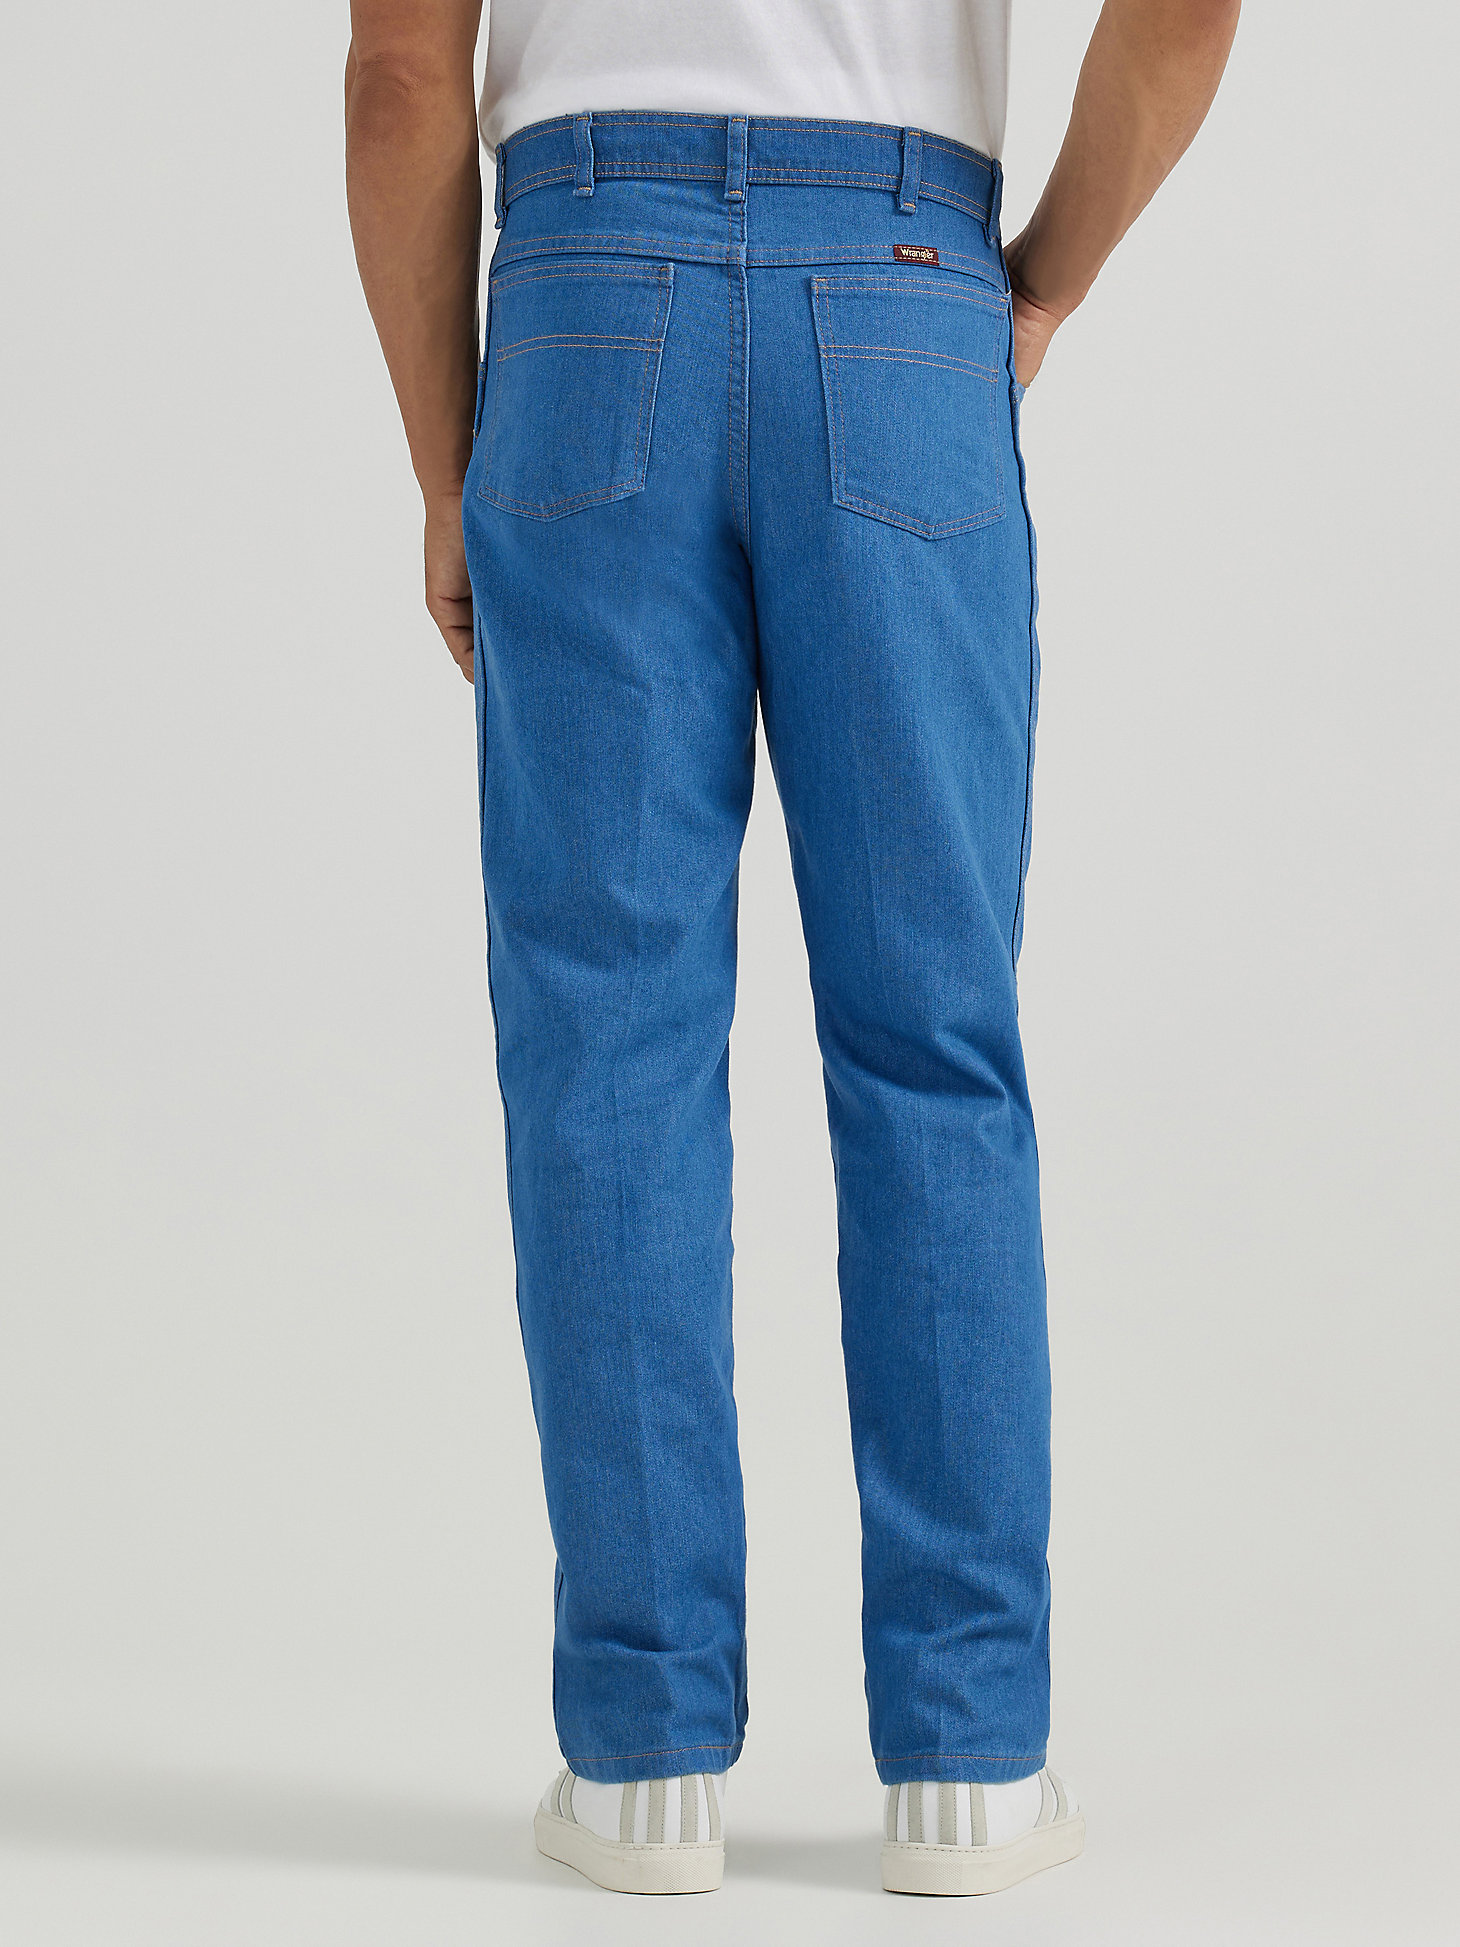 Wrangler® Men's Five Star Premium Regular Flex Fit Jean in Light Blue alternative view 1